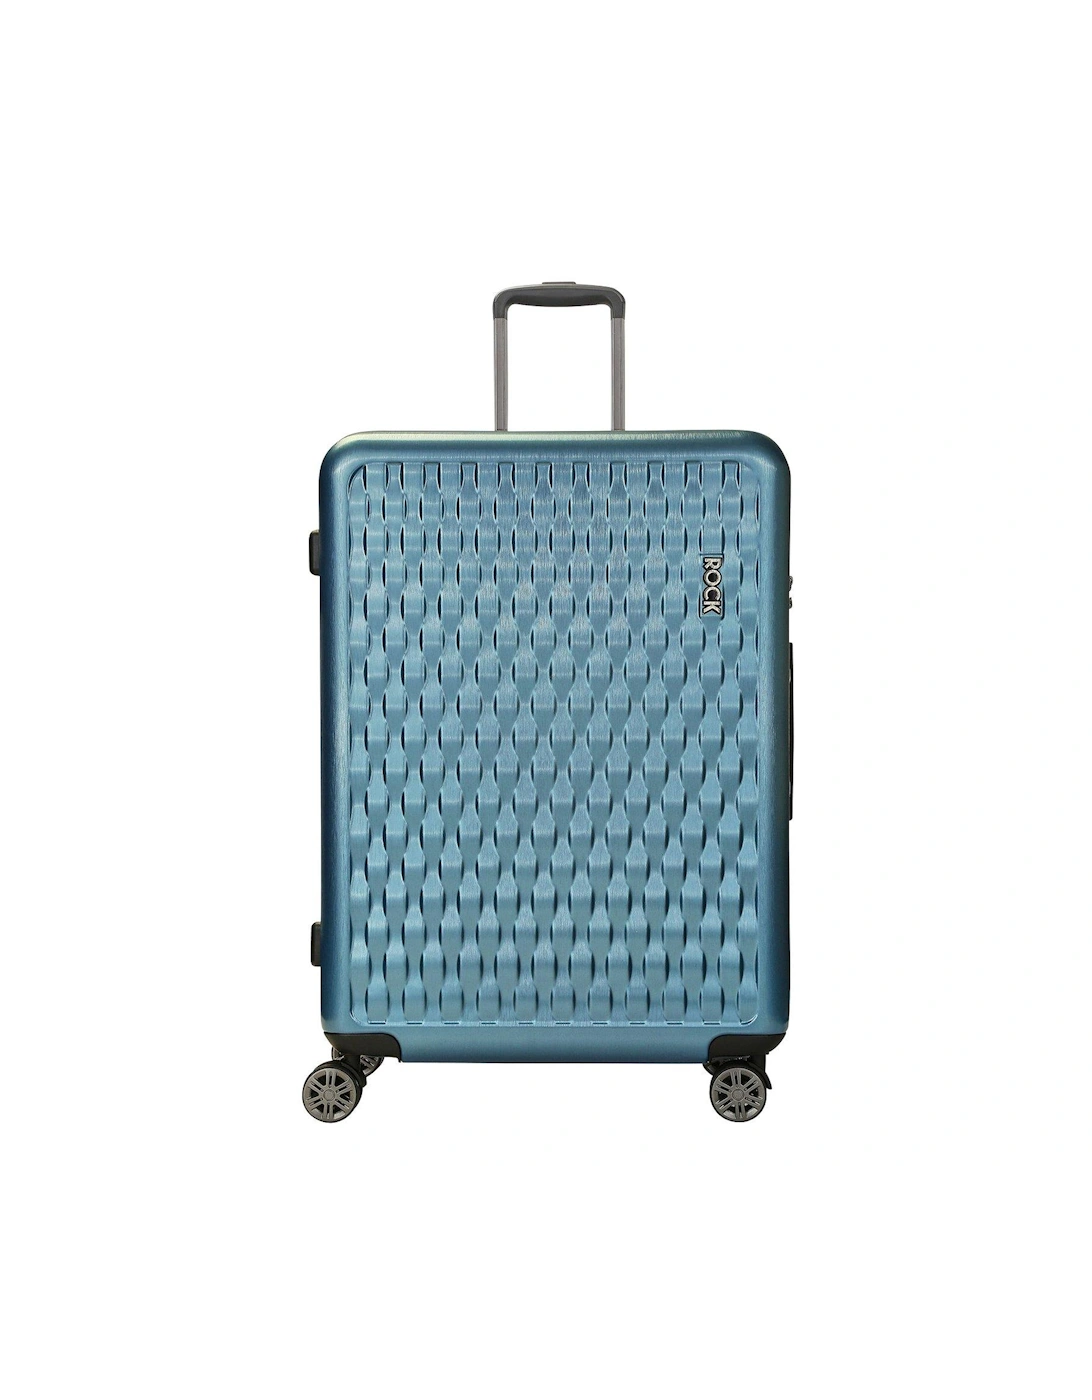 Allure Large 8-Wheel Suitcase - Blue